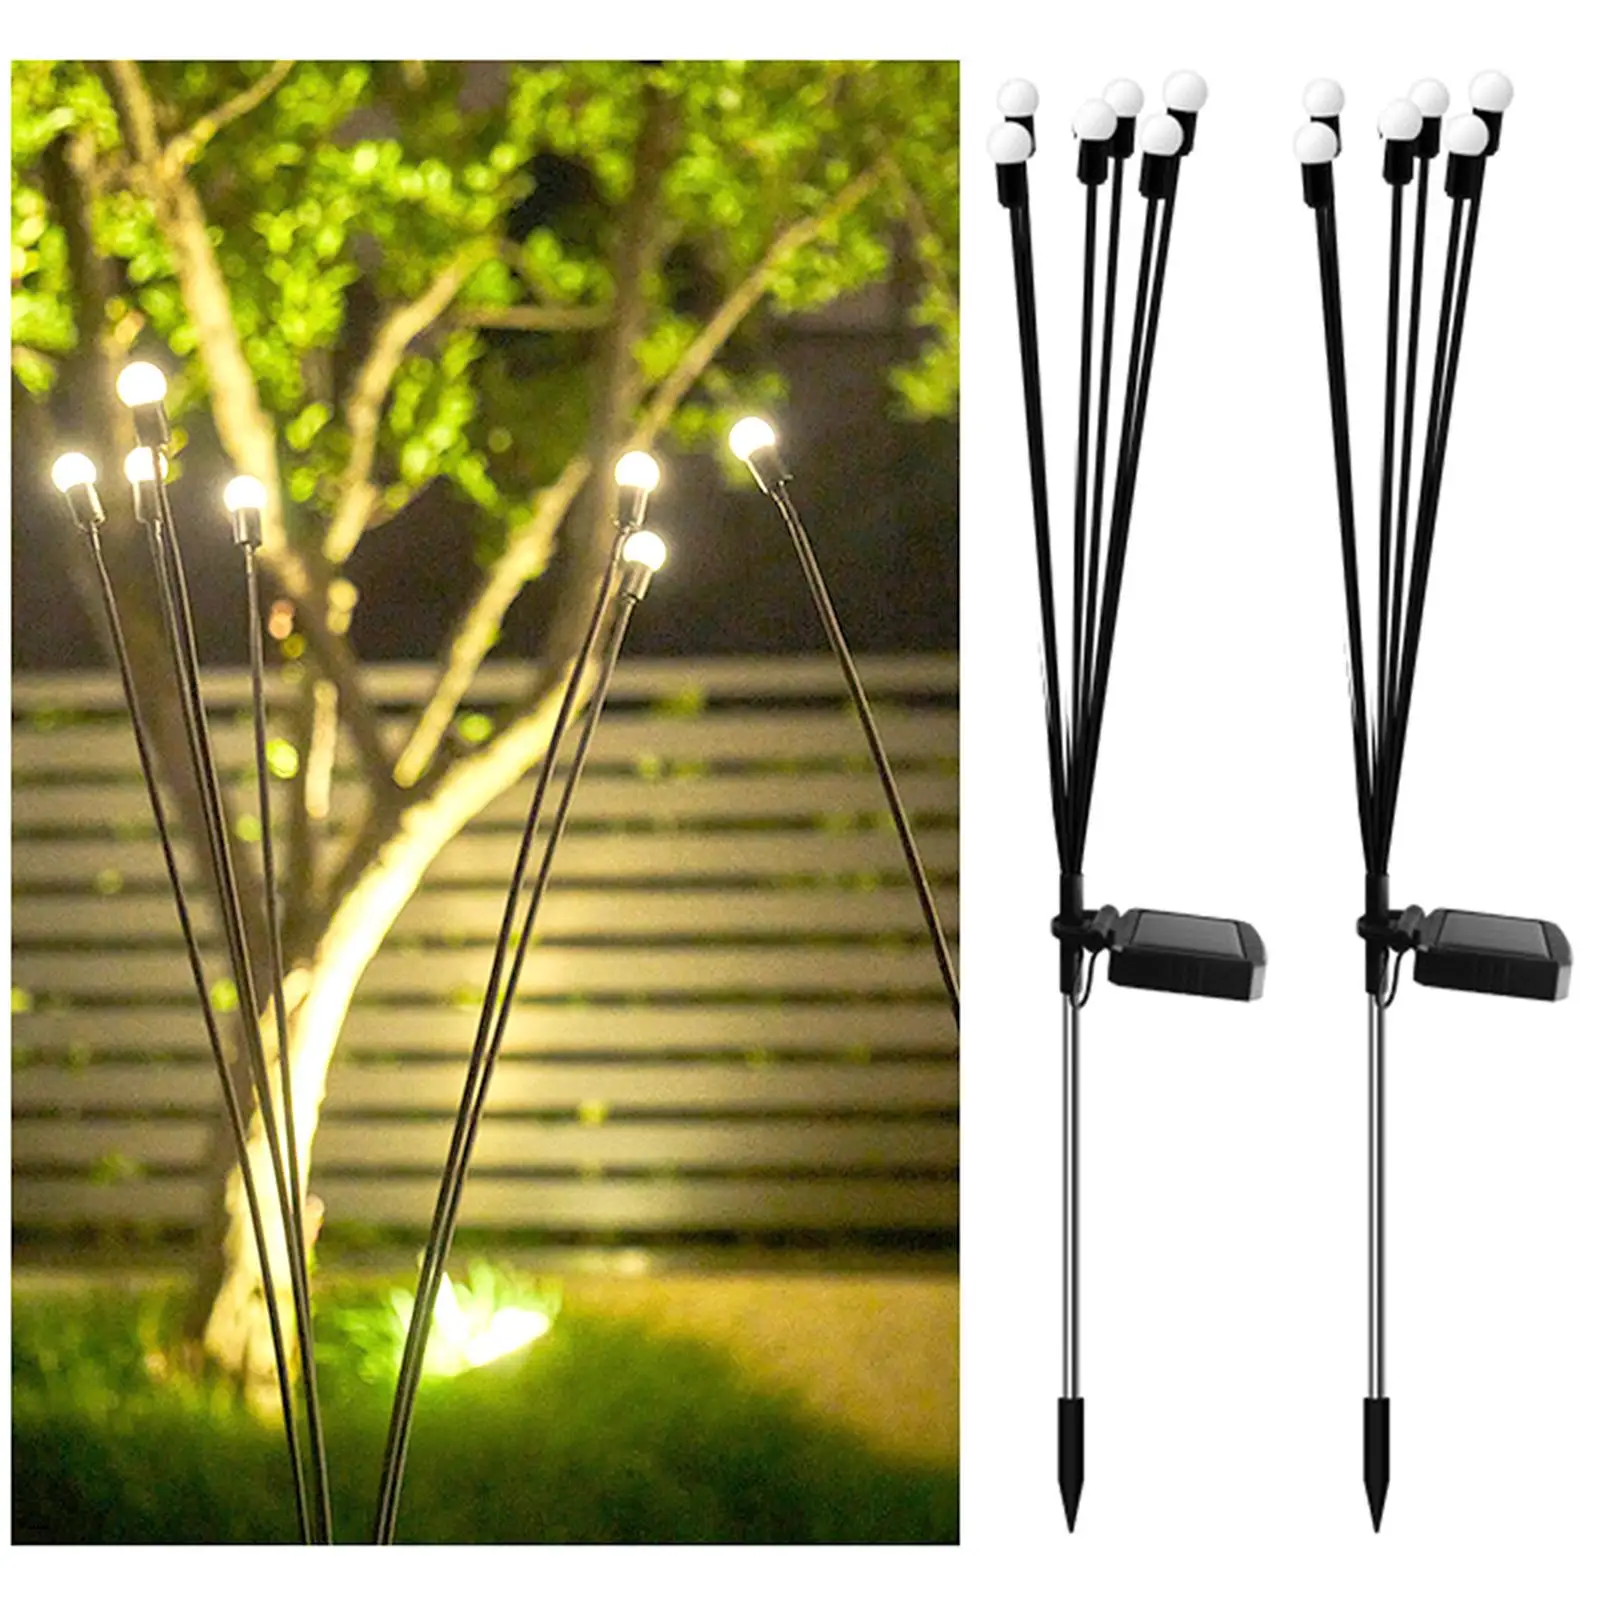 2 Pieces Solar Garden Lights LED Stake Lights Waterproof Lamp DIY Landscape Light for Patio Lawn Yard Walkway Decoration